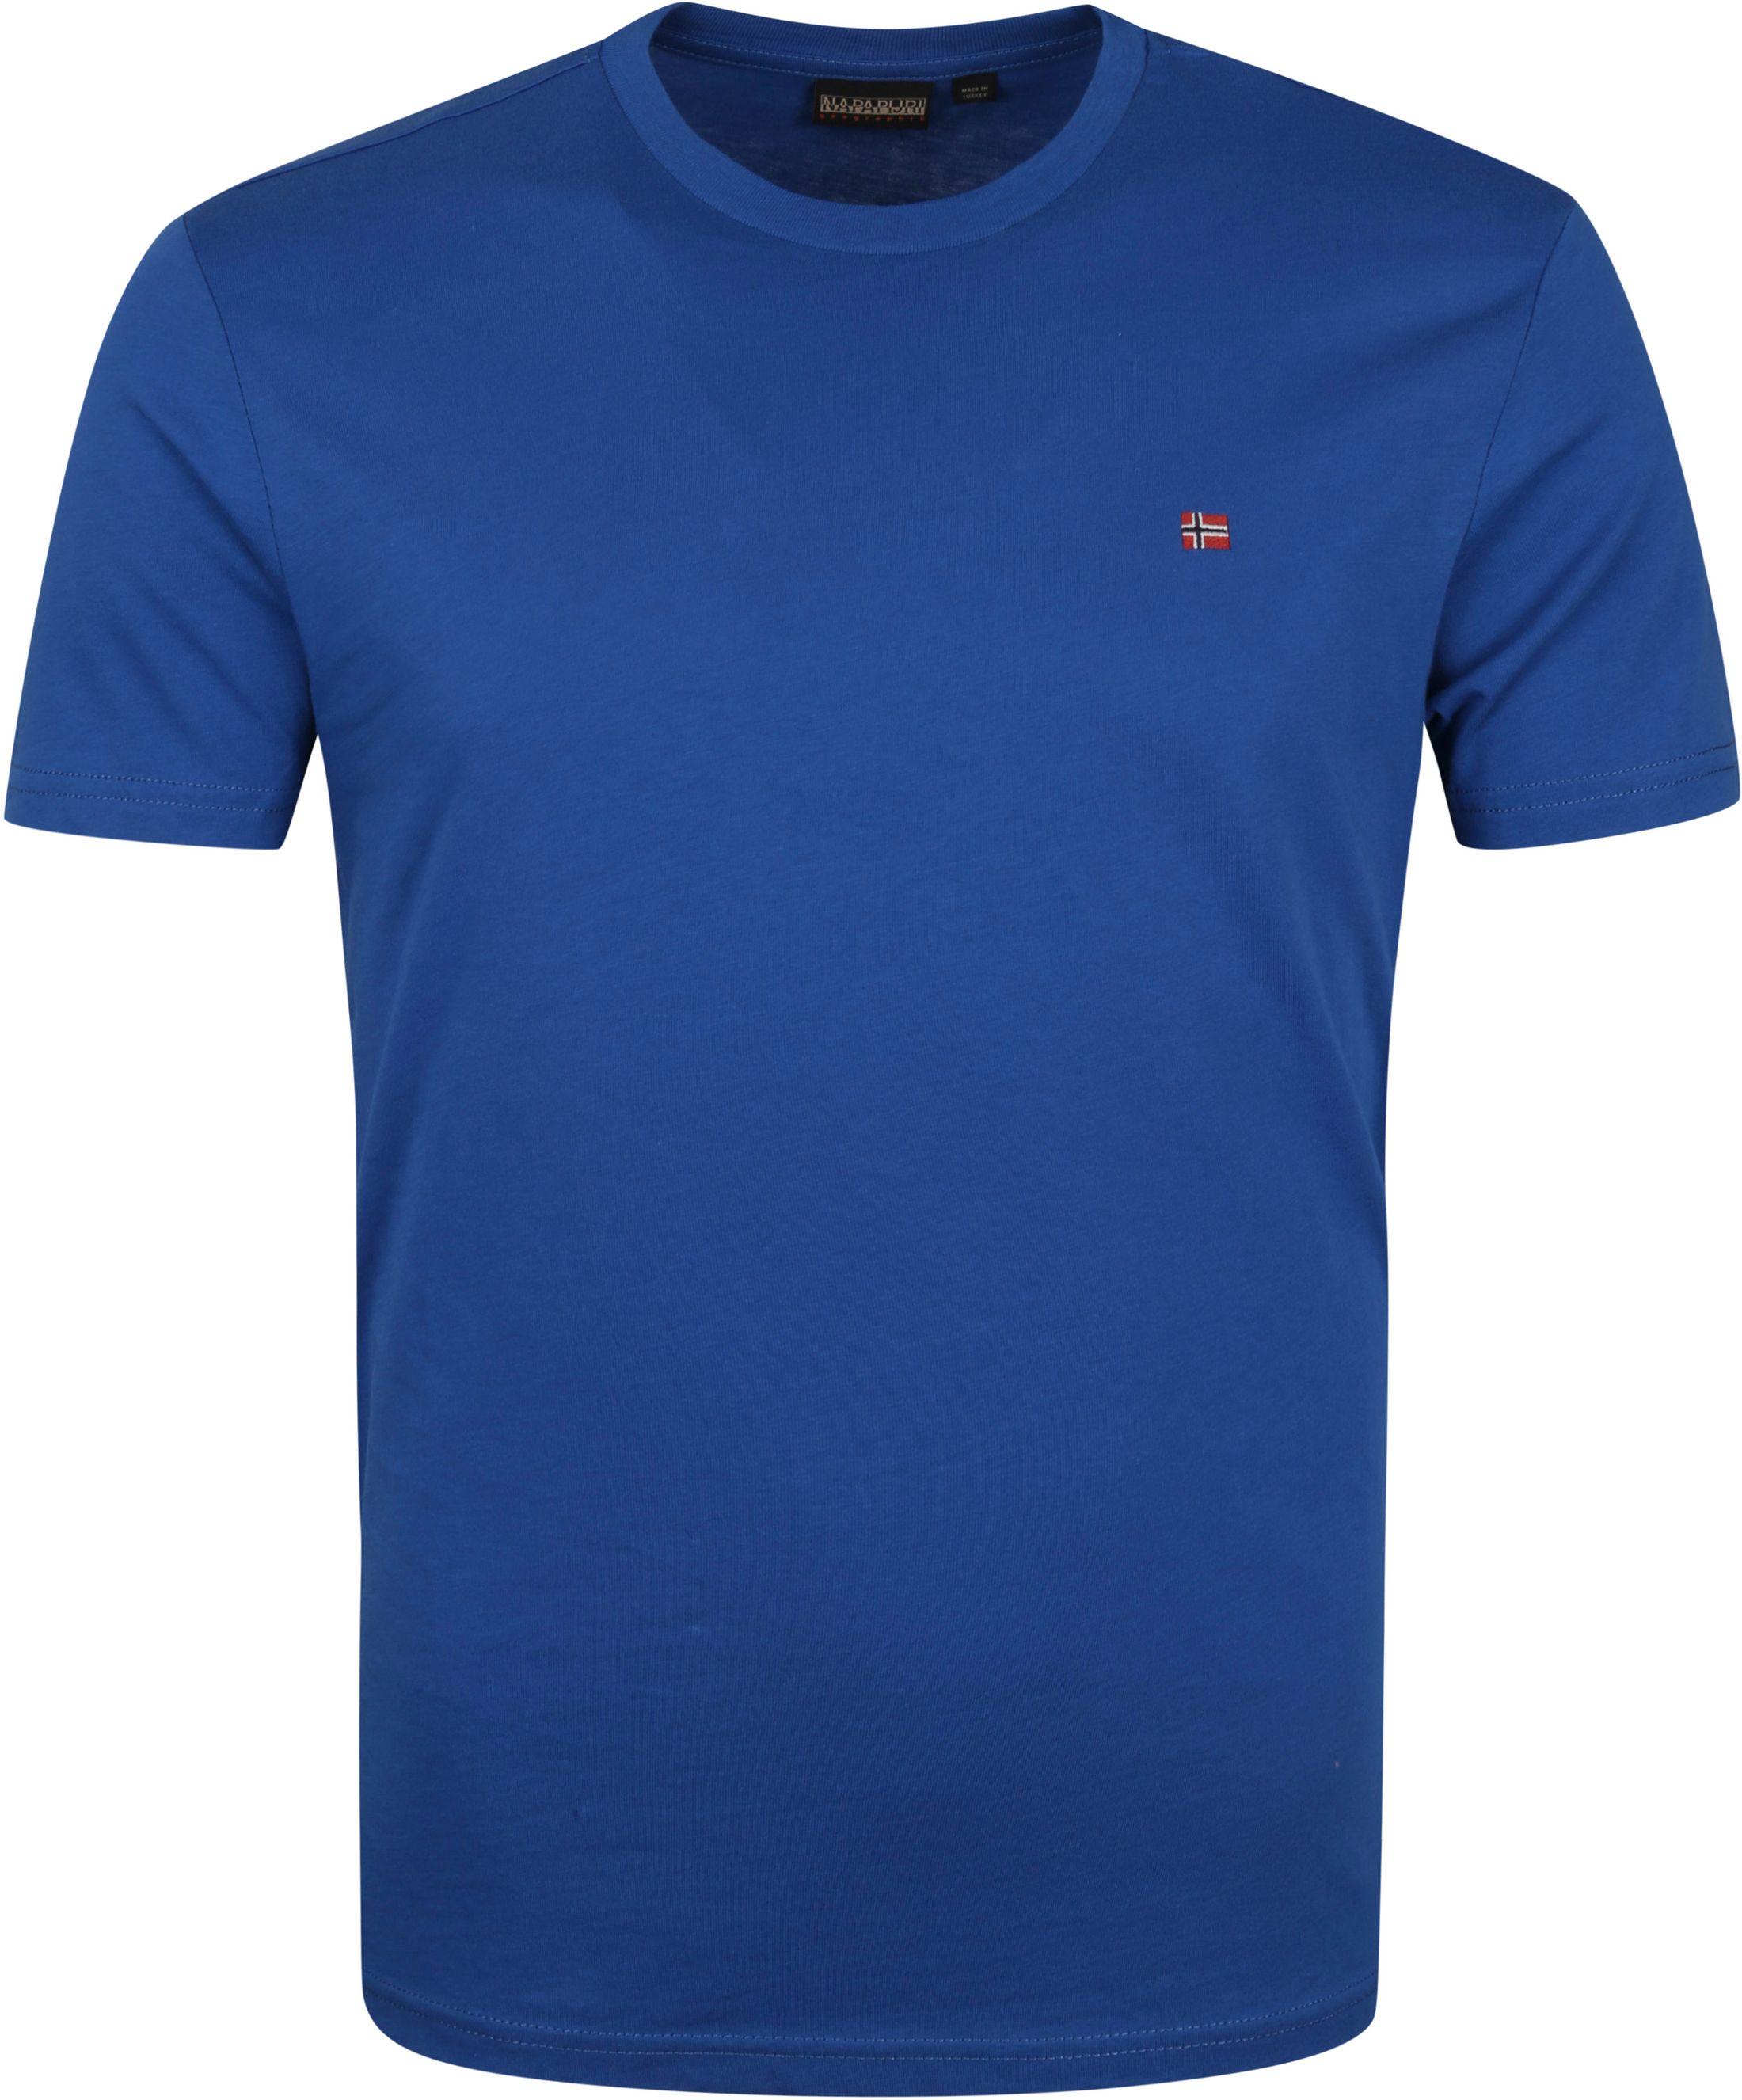 Napapijri Salis T-Shirt Blue size 3XL